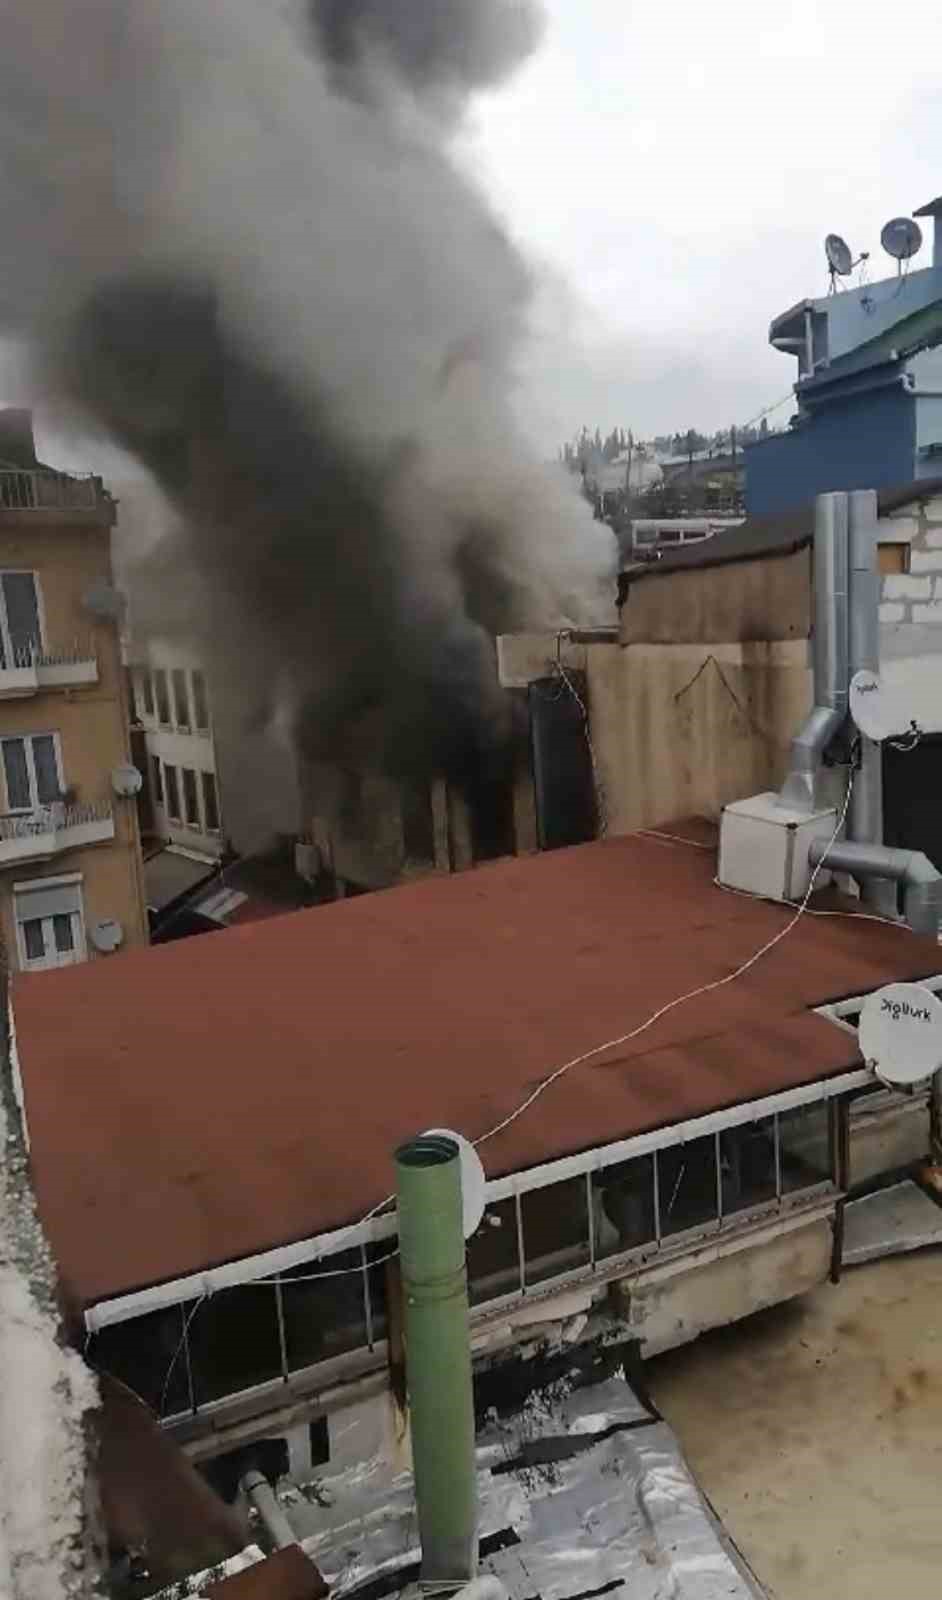 Ortaköy’de bulunan 2 katlı iş yeri alev alev yandı
